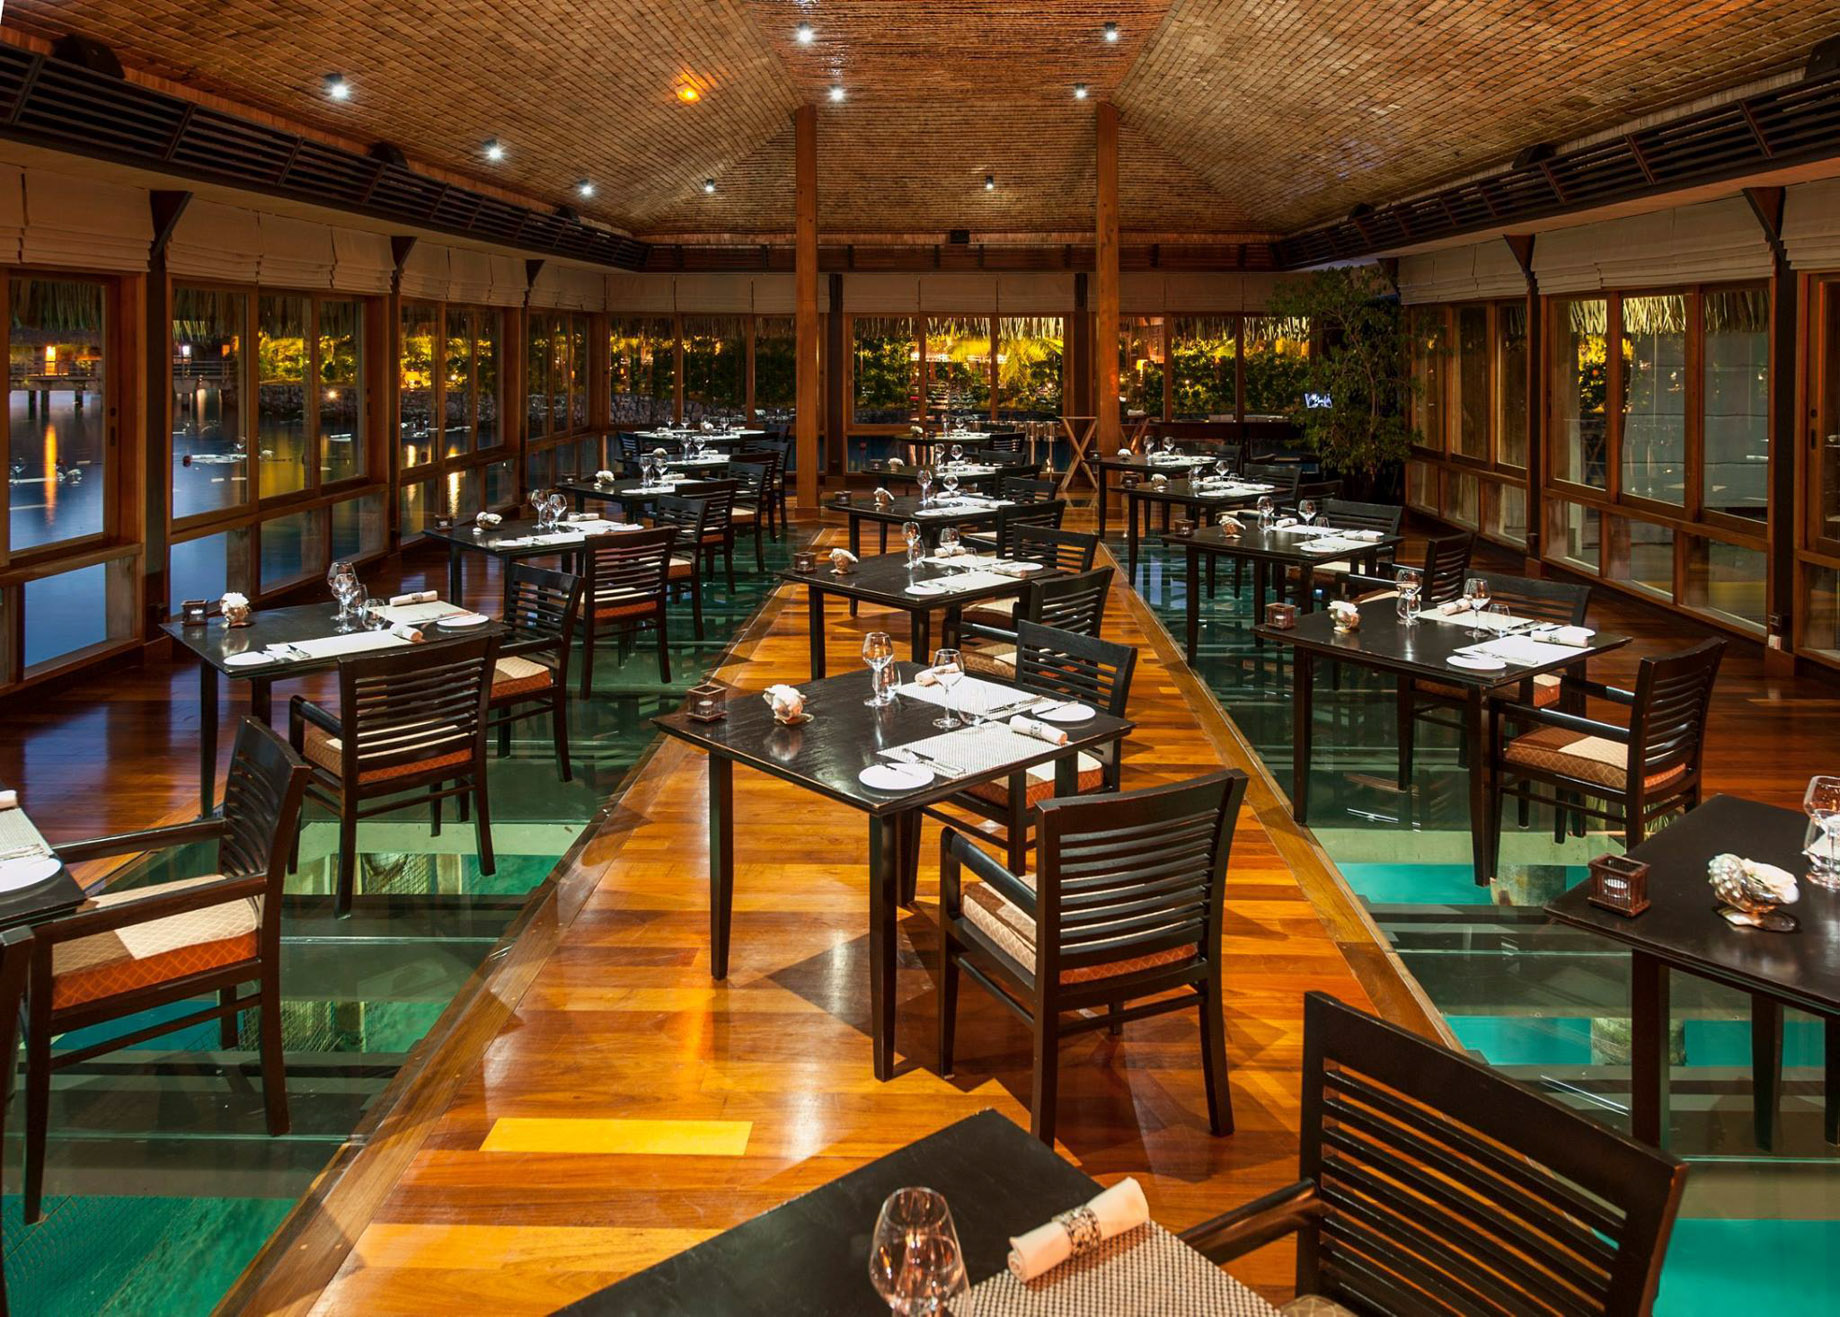 The St. Regis Bora Bora Resort - Bora Bora, French Polynesia - Signature Lagoon Restaurant Interior